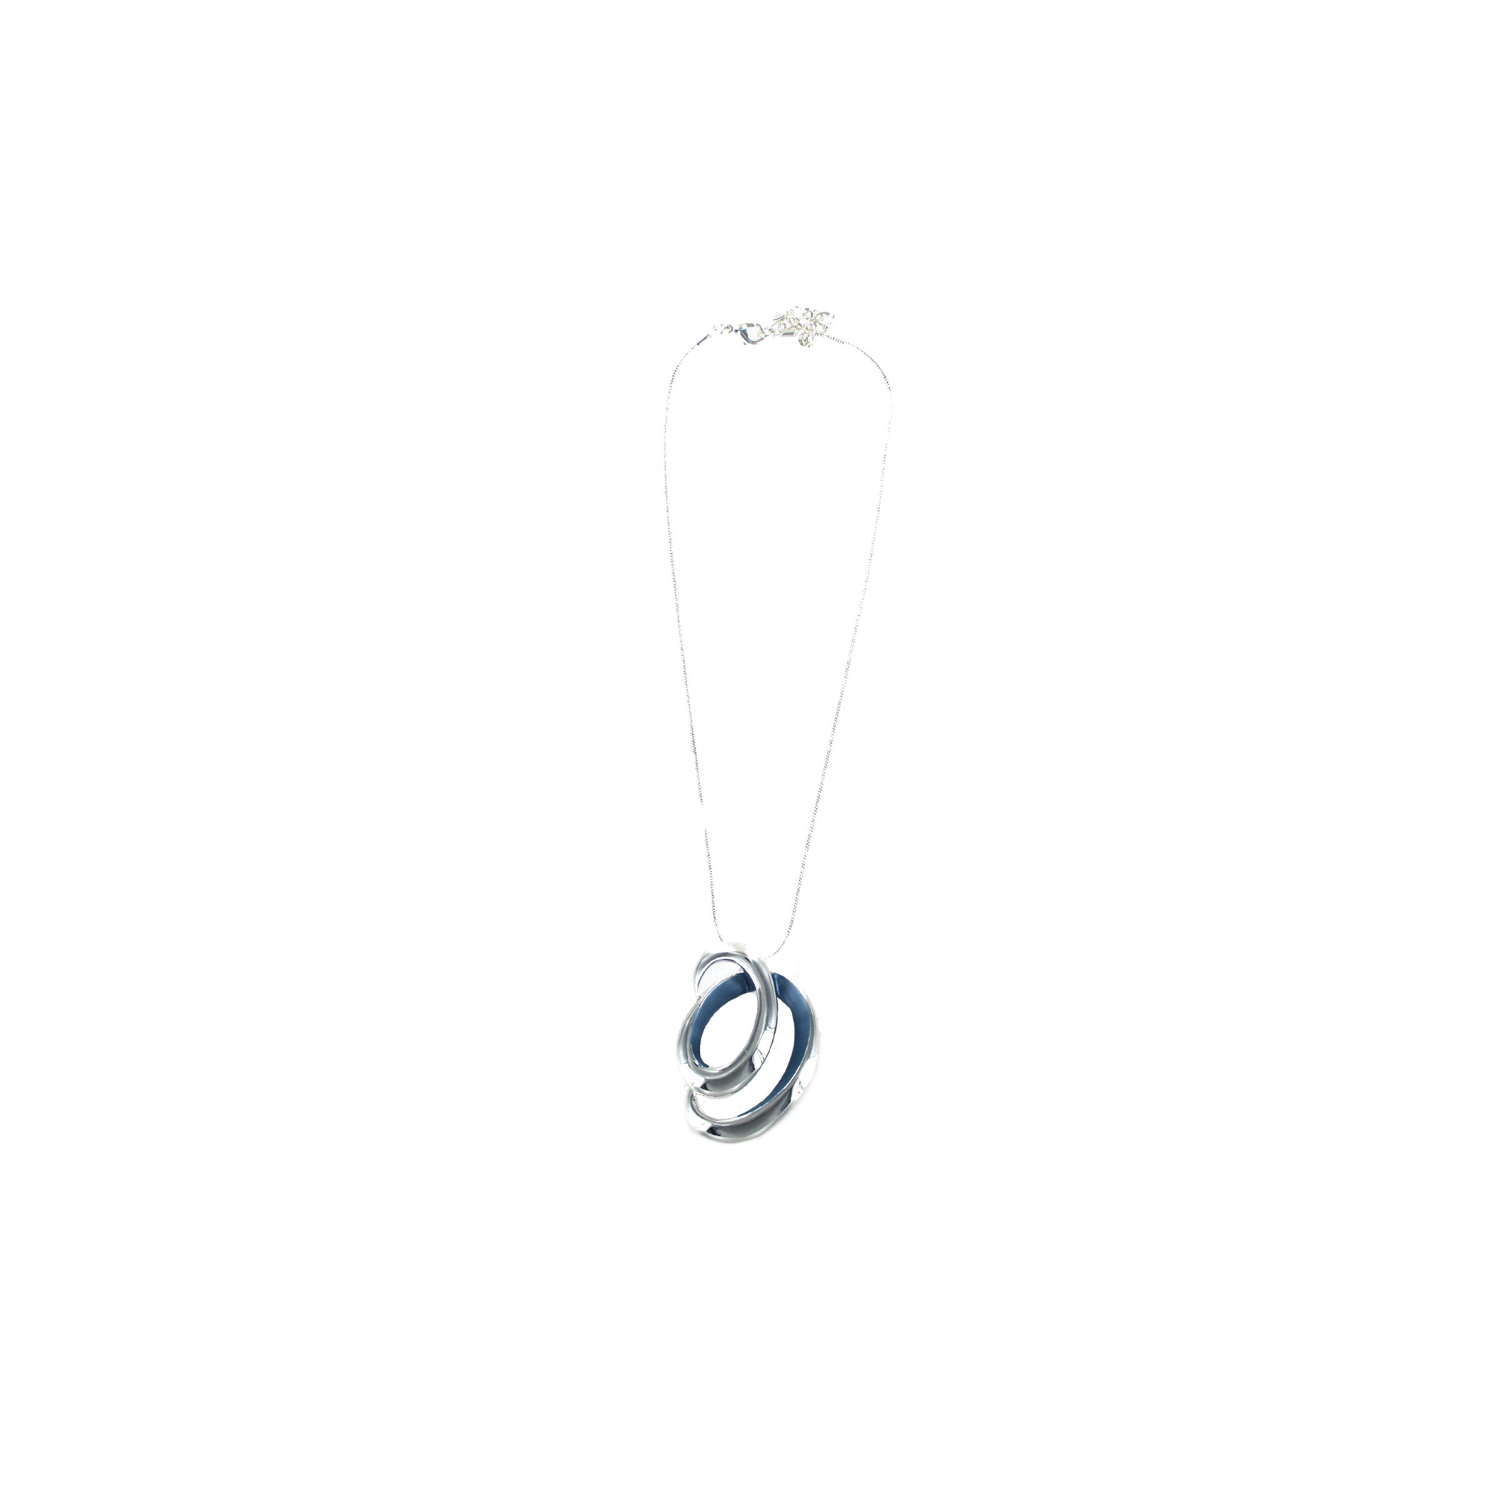 Unusual grey blue enamel pendant necklace on silver tone chain.